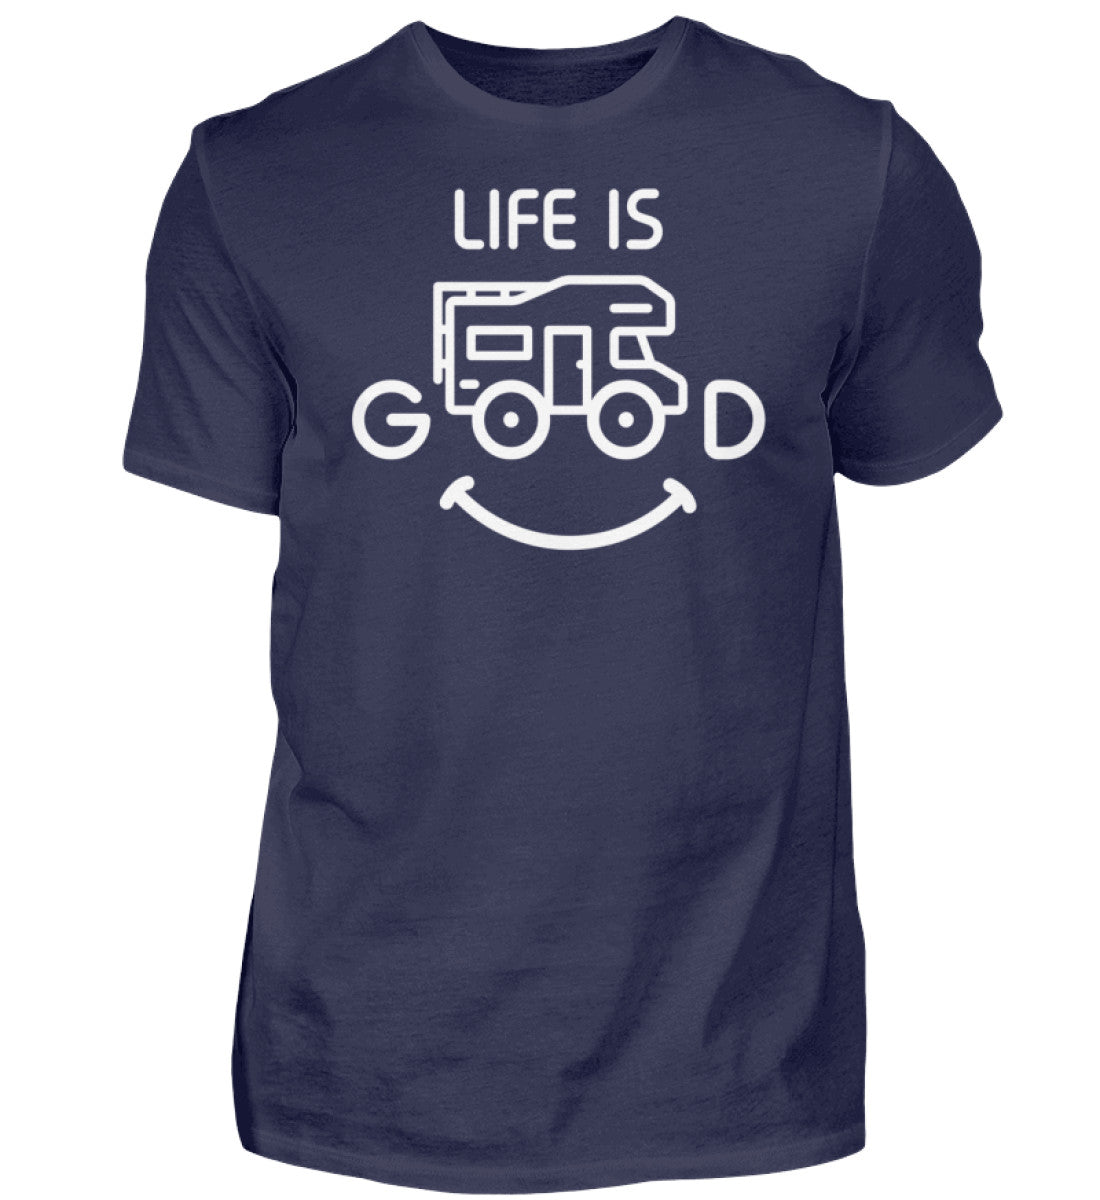 LIFE IS GOOD - Herren Shirt in der Farbe Navy